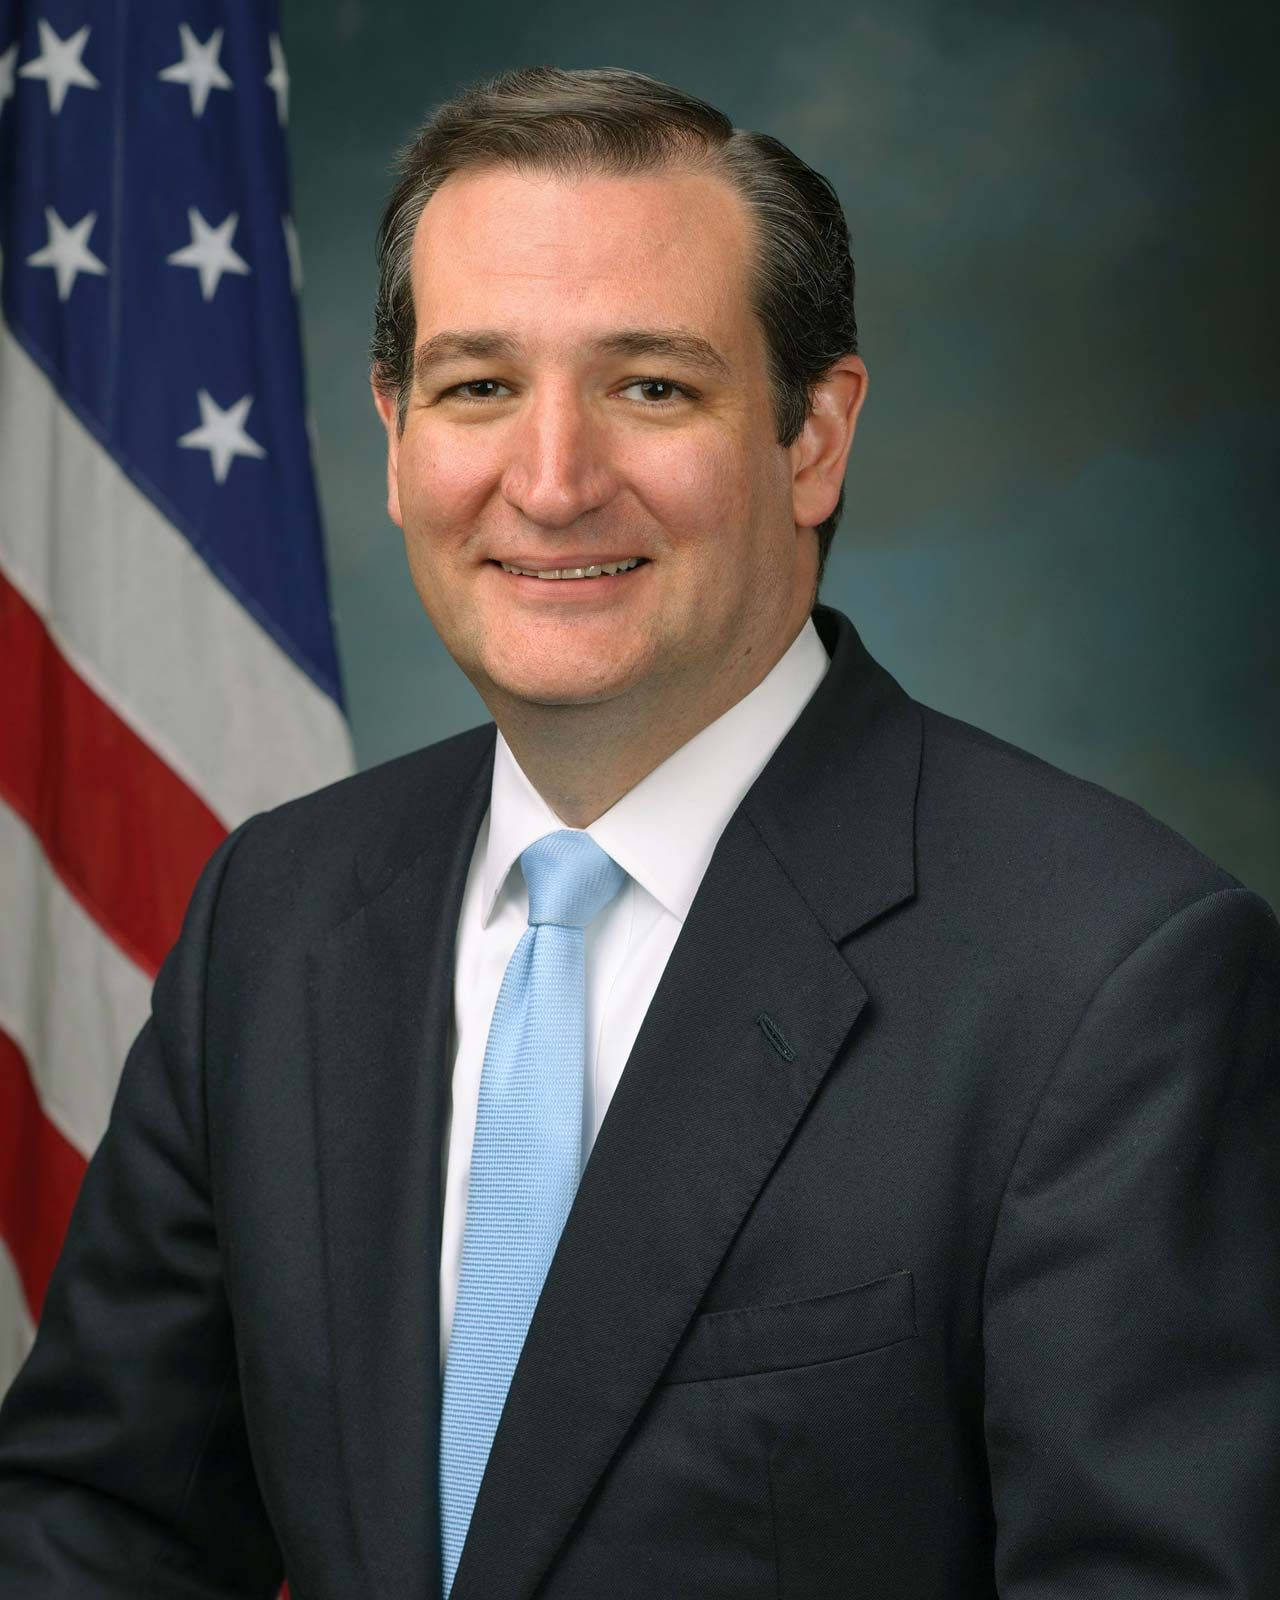 Ted Cruz Without Beard Wallpaper